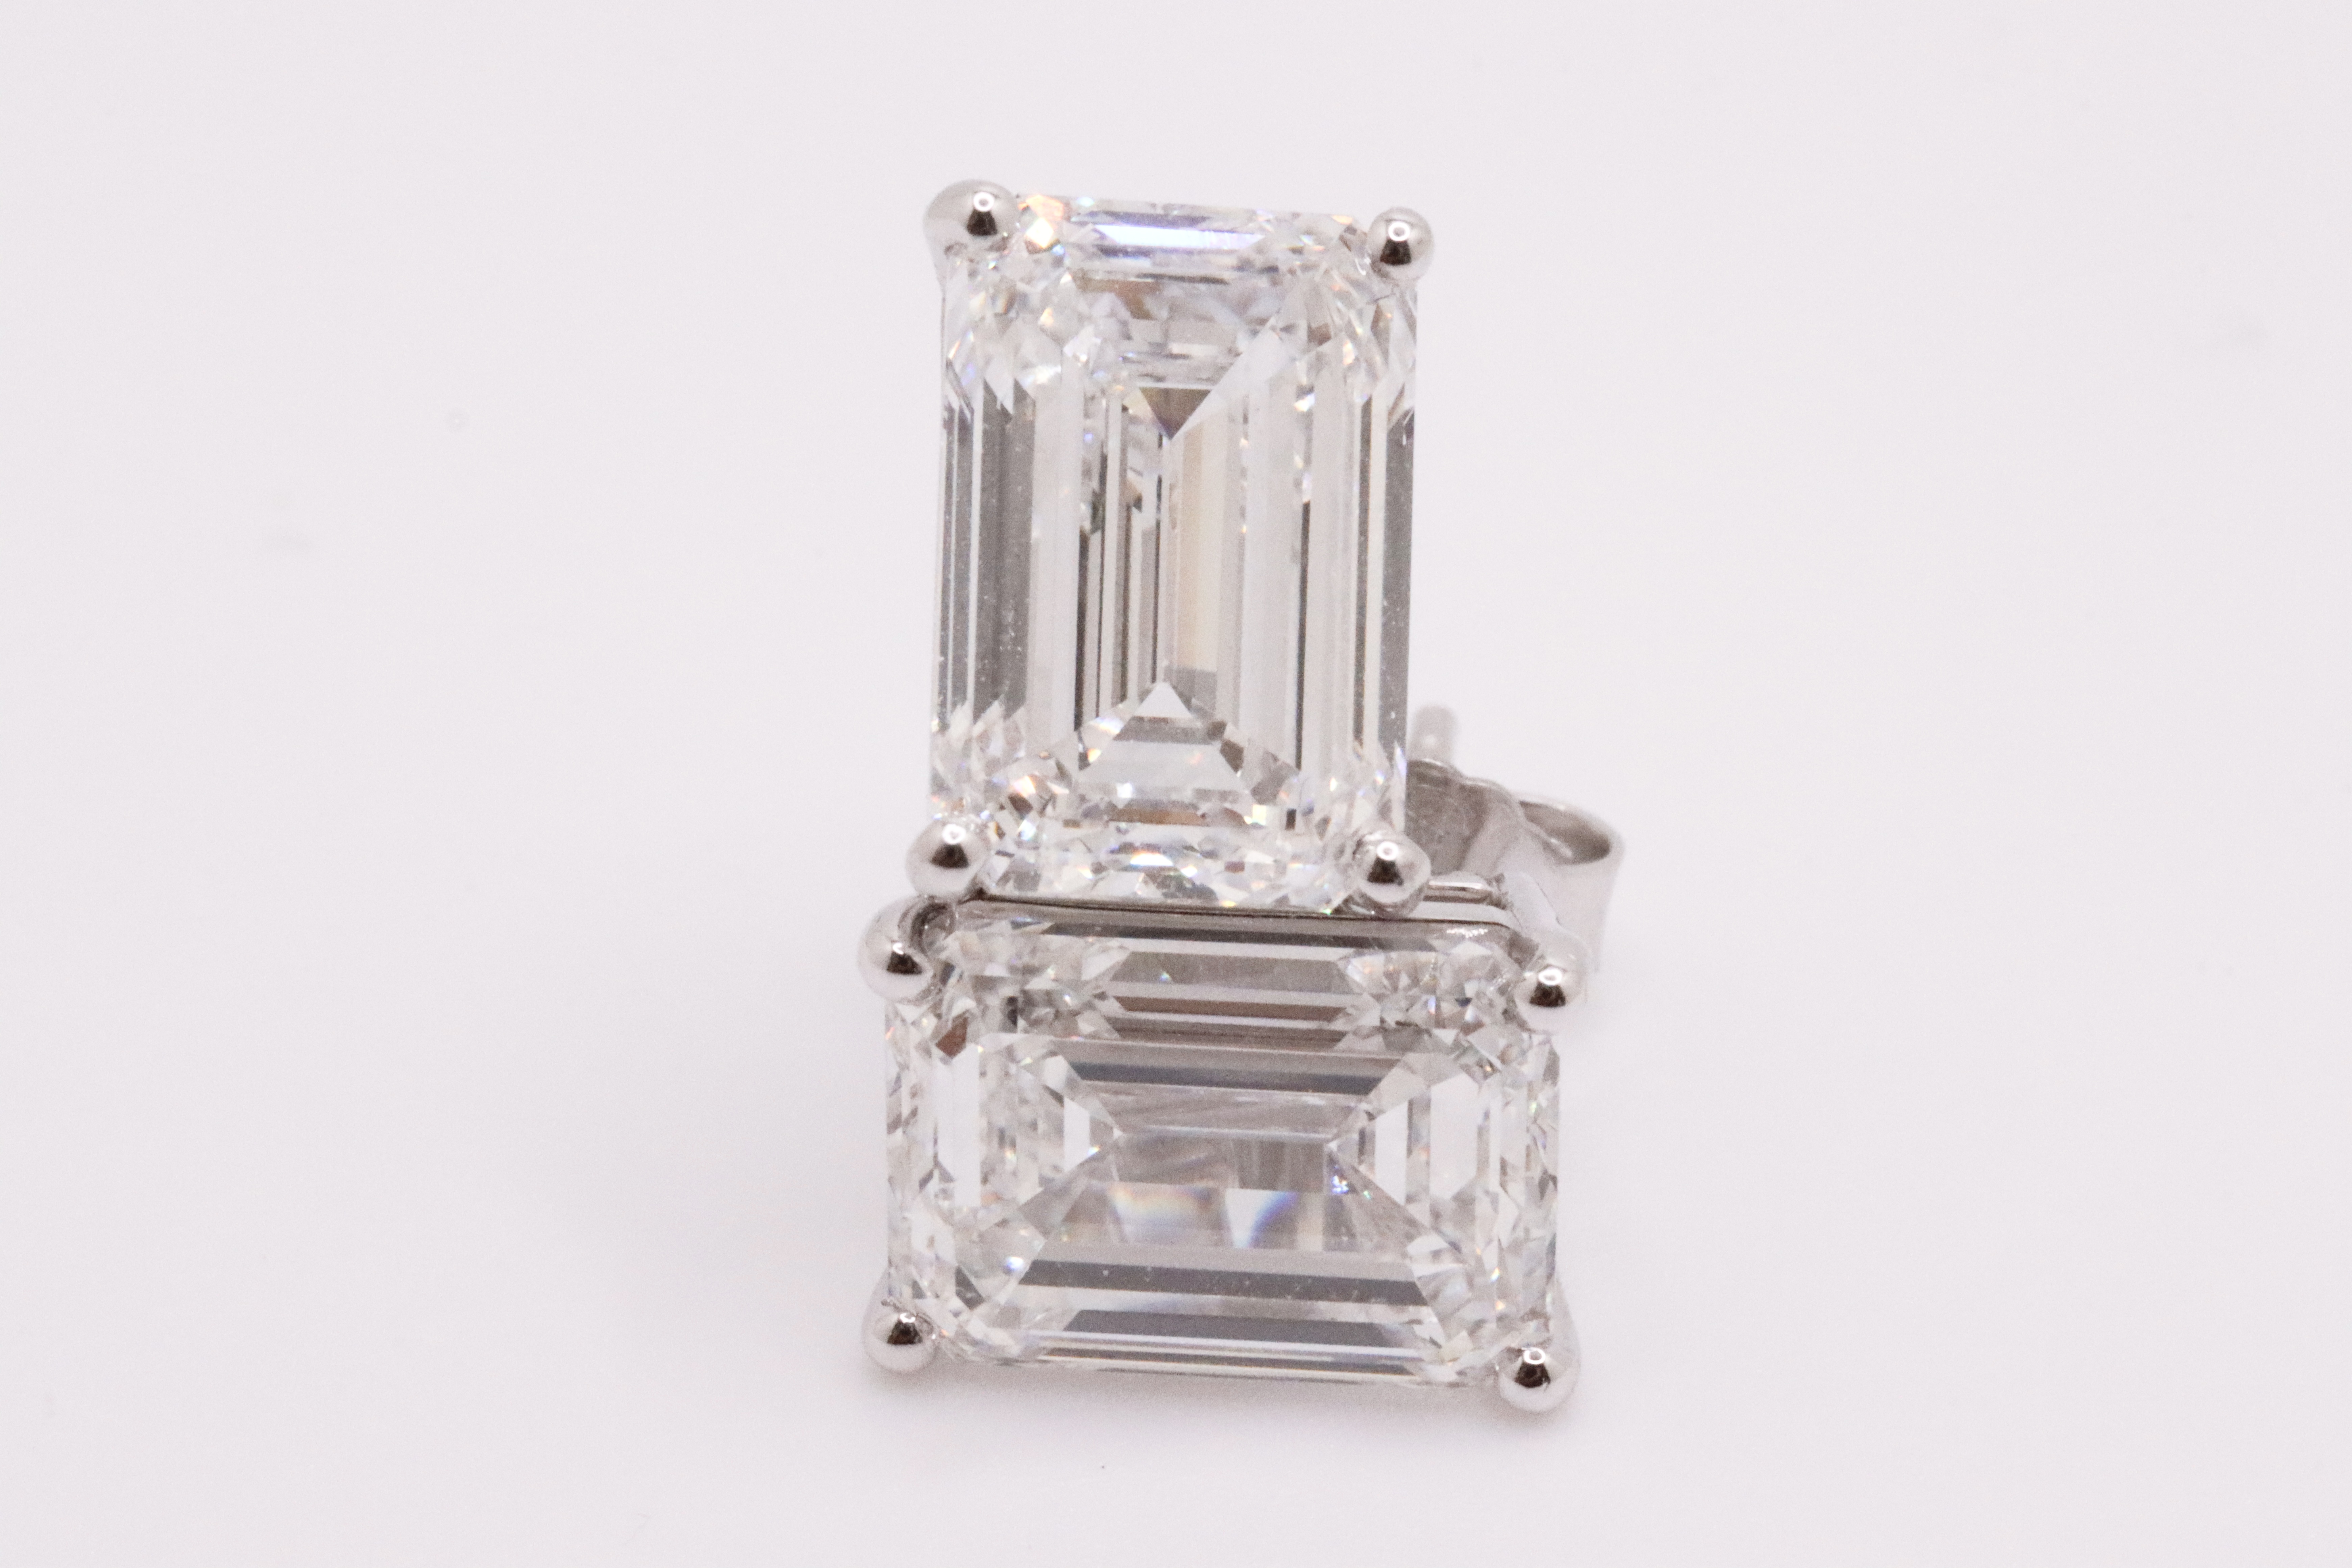 Emerald Cut Cut 12.00 Carat Diamond 18kt White Gold Earrings- D Colour VVS Clarity IGI